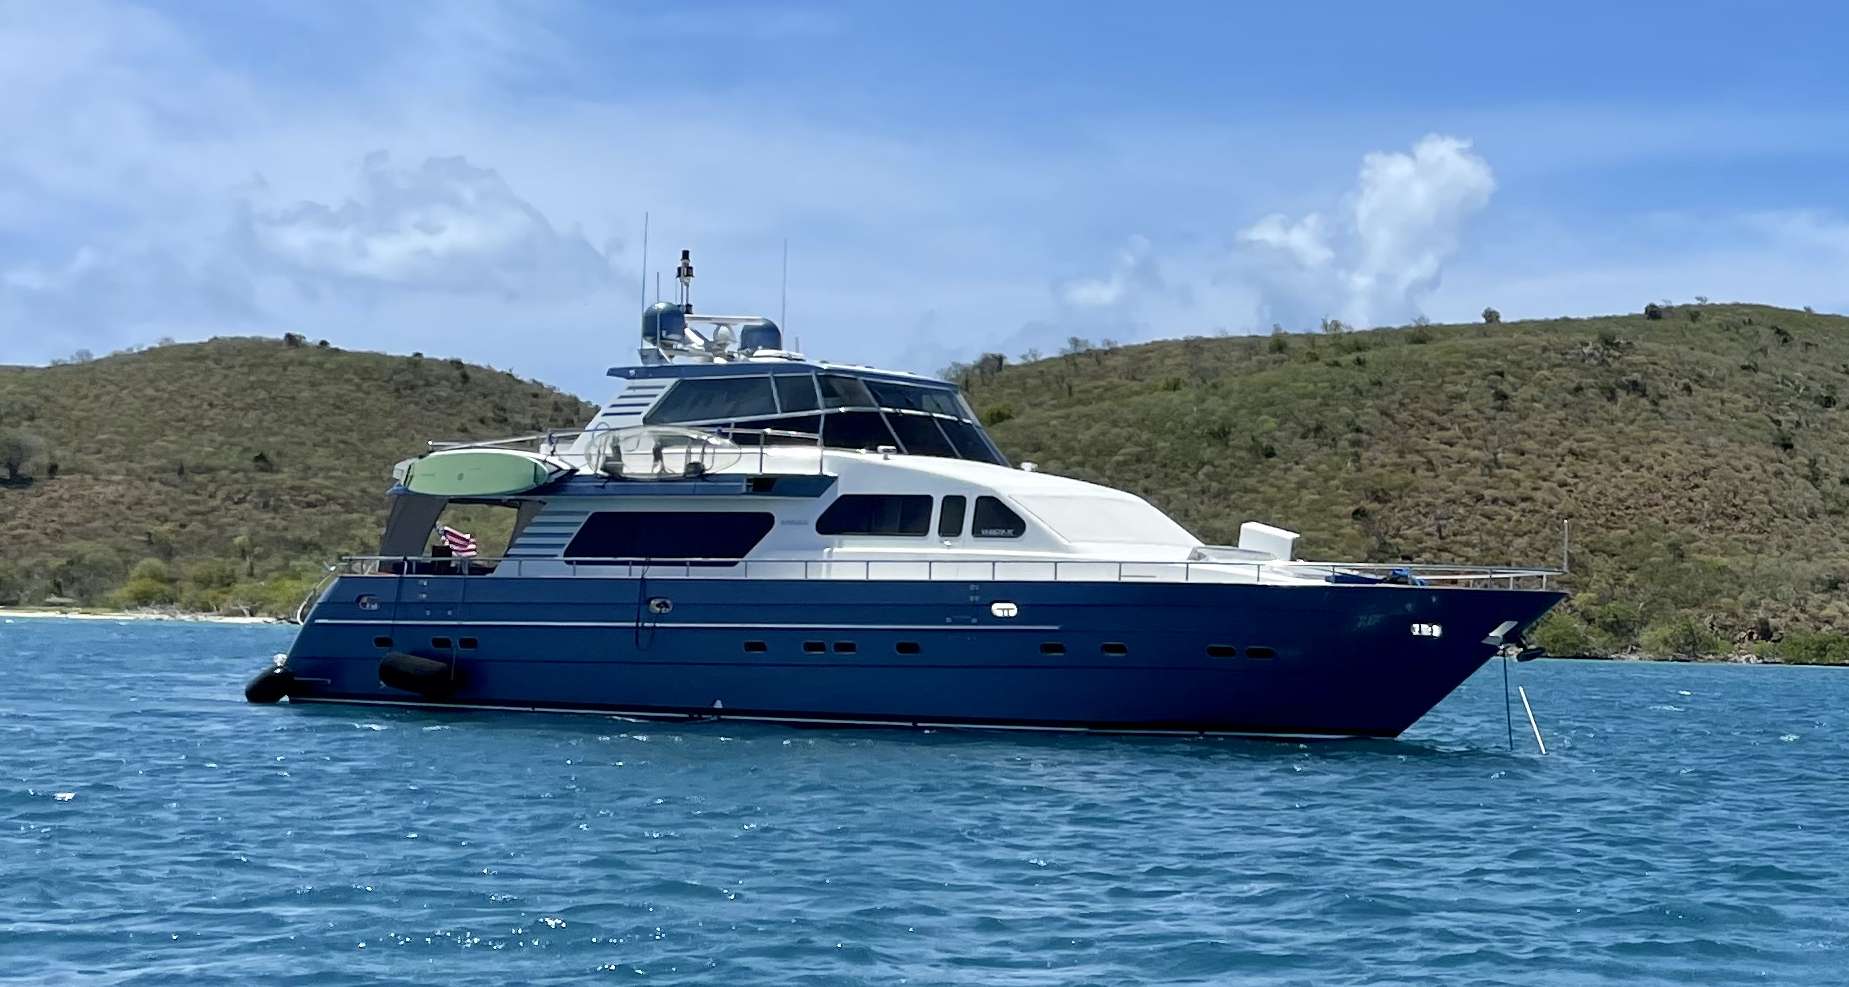 QARA - Superyacht charter St Martin & Boat hire in Caribbean 1